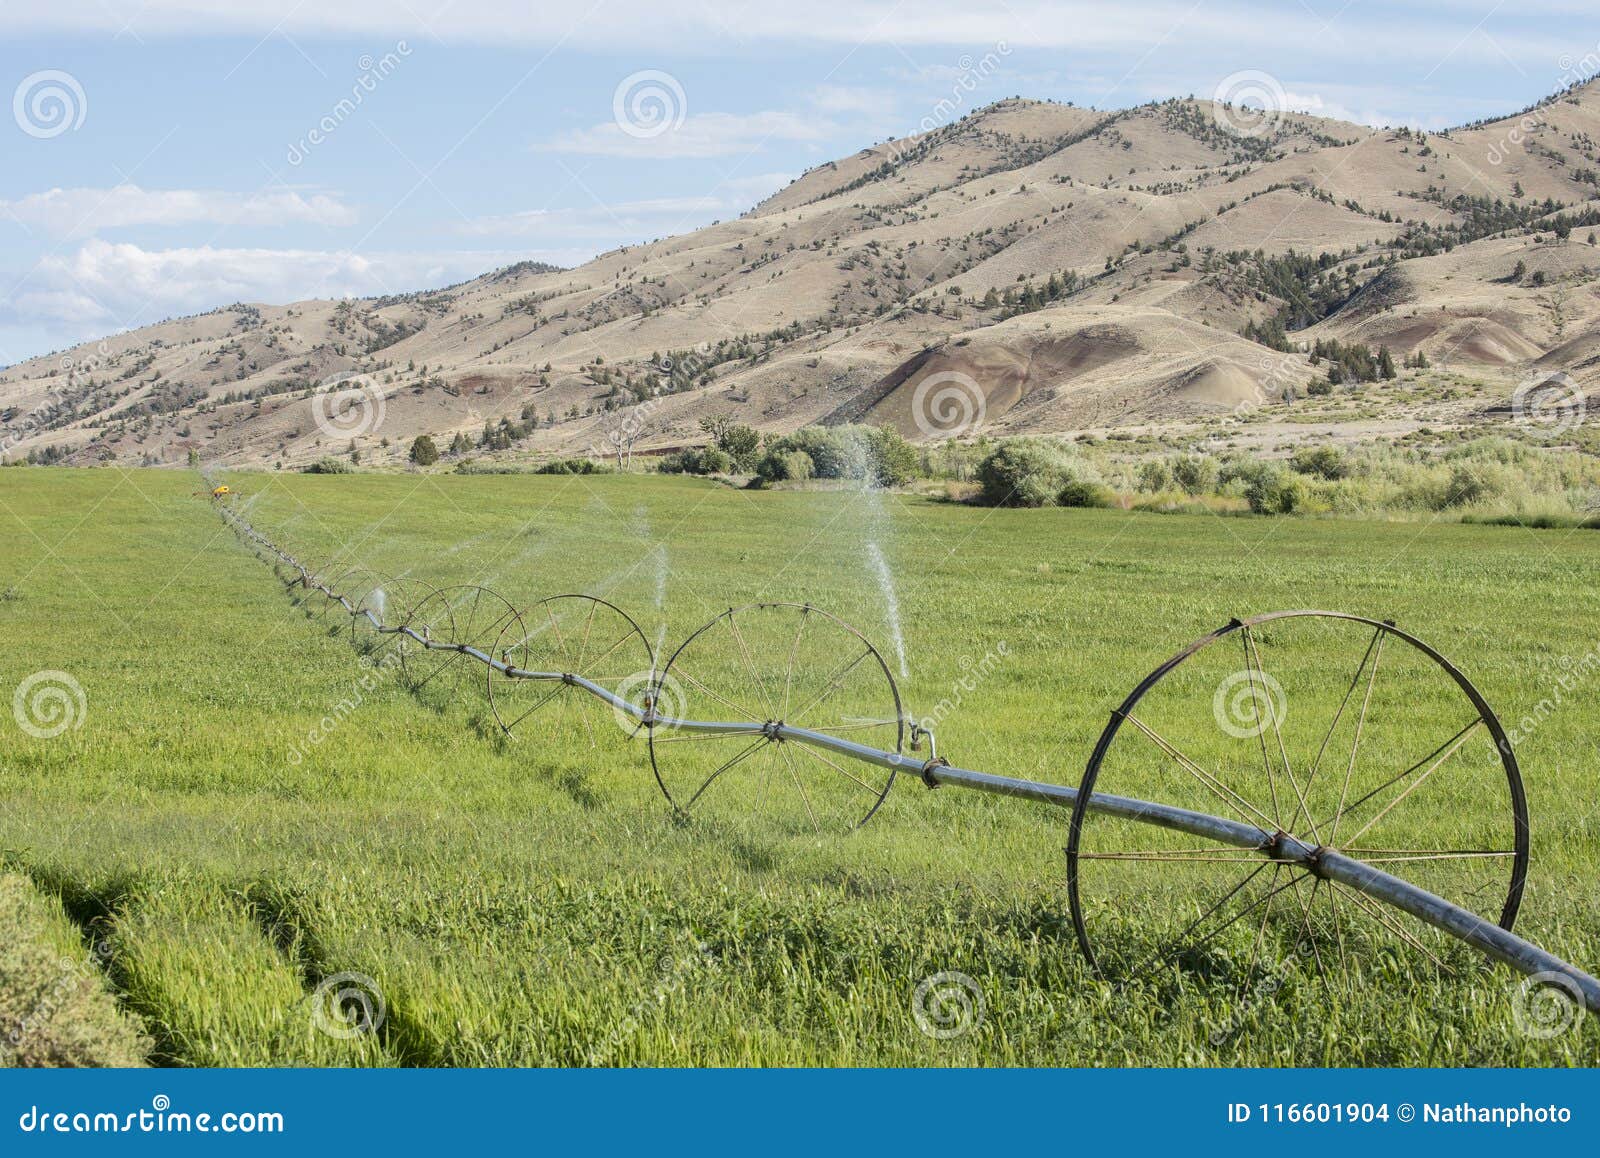 traveling sprinkler irrigates crop for animal feed